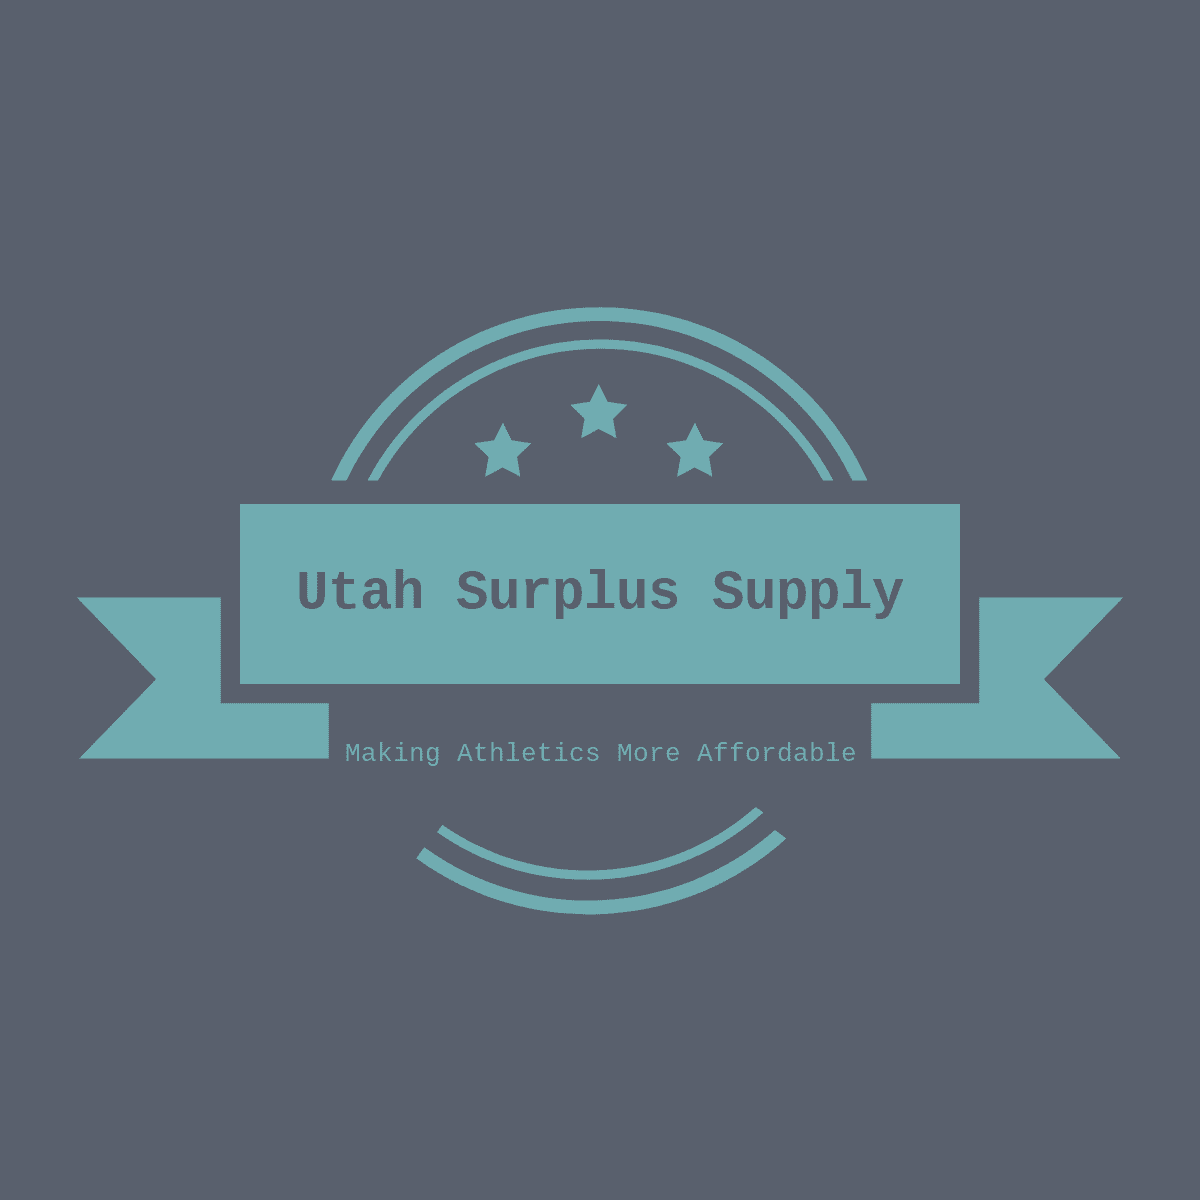 Utah Surplus Supply